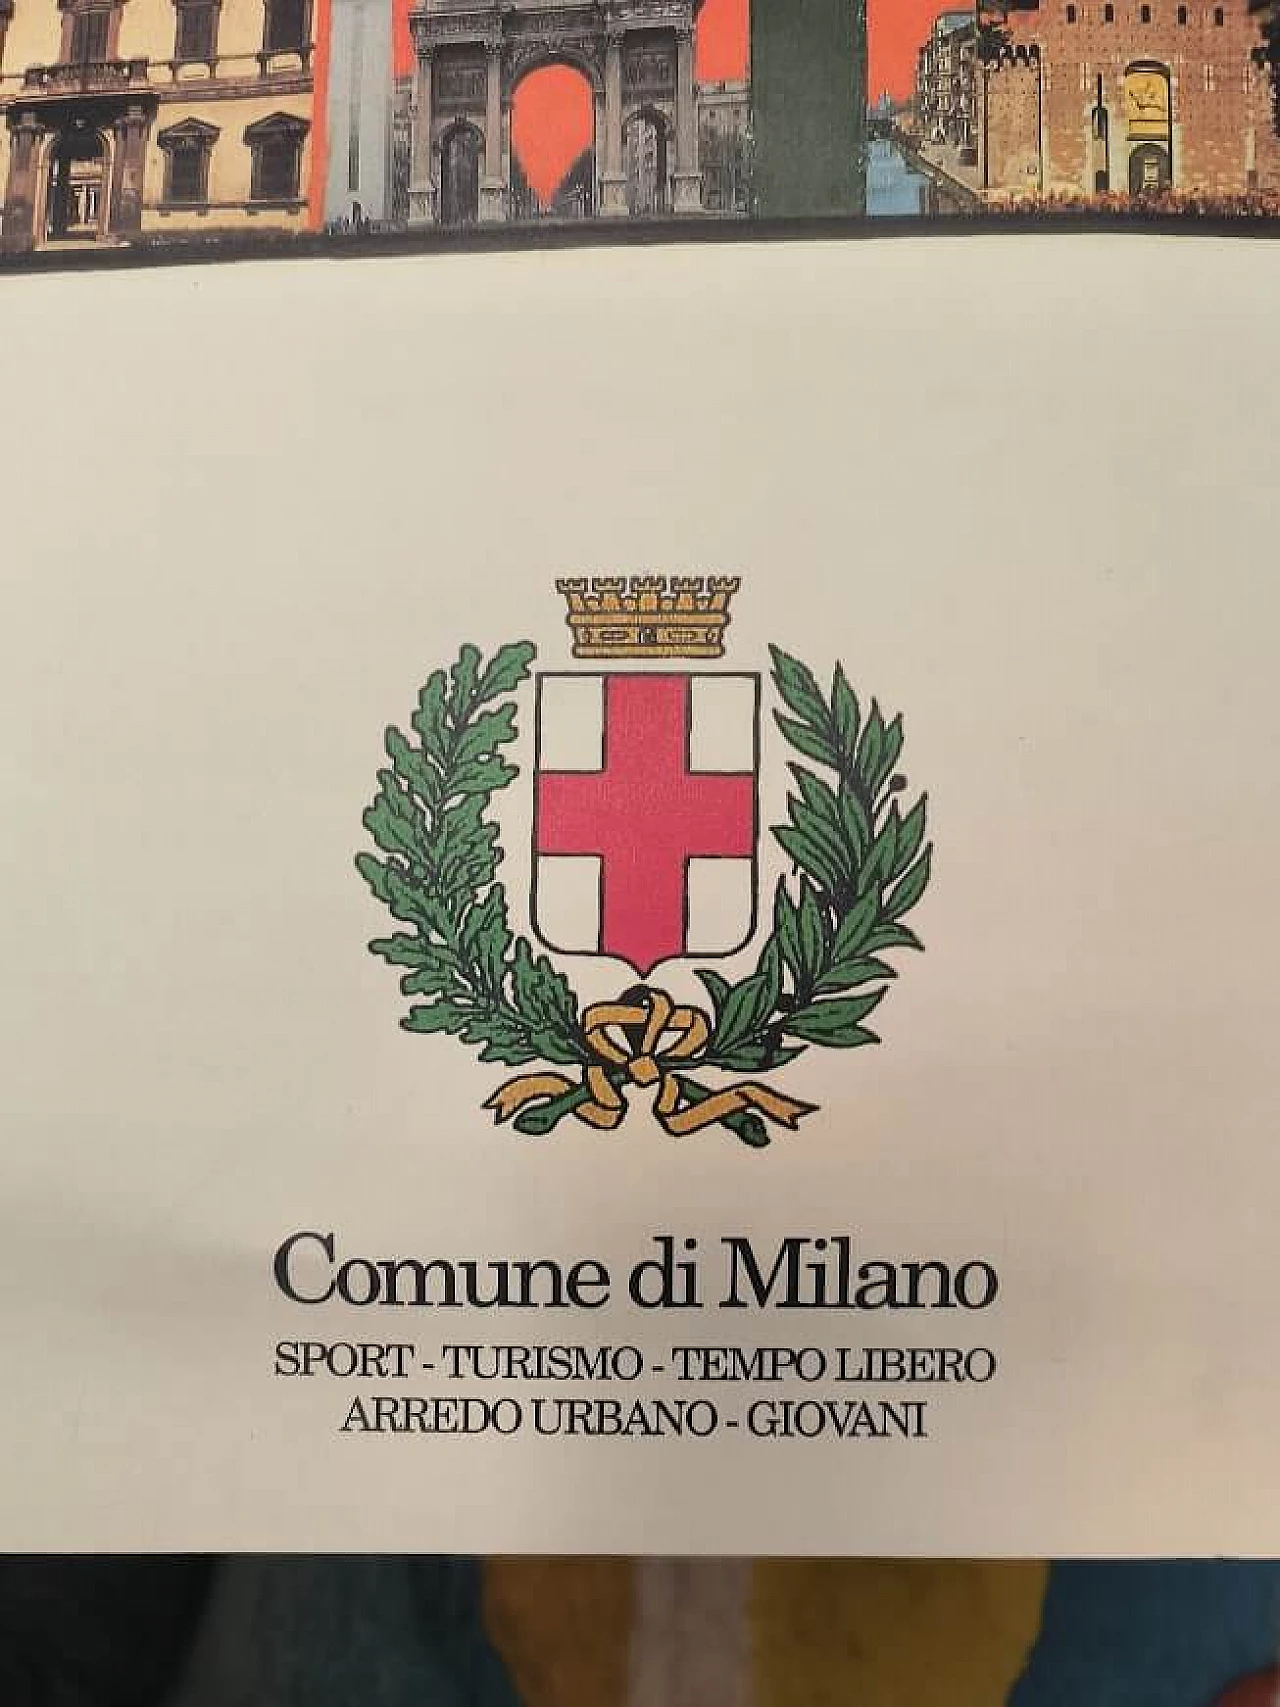 Stefano Pizzi, Milan tourism promotion poster, 1980s 4